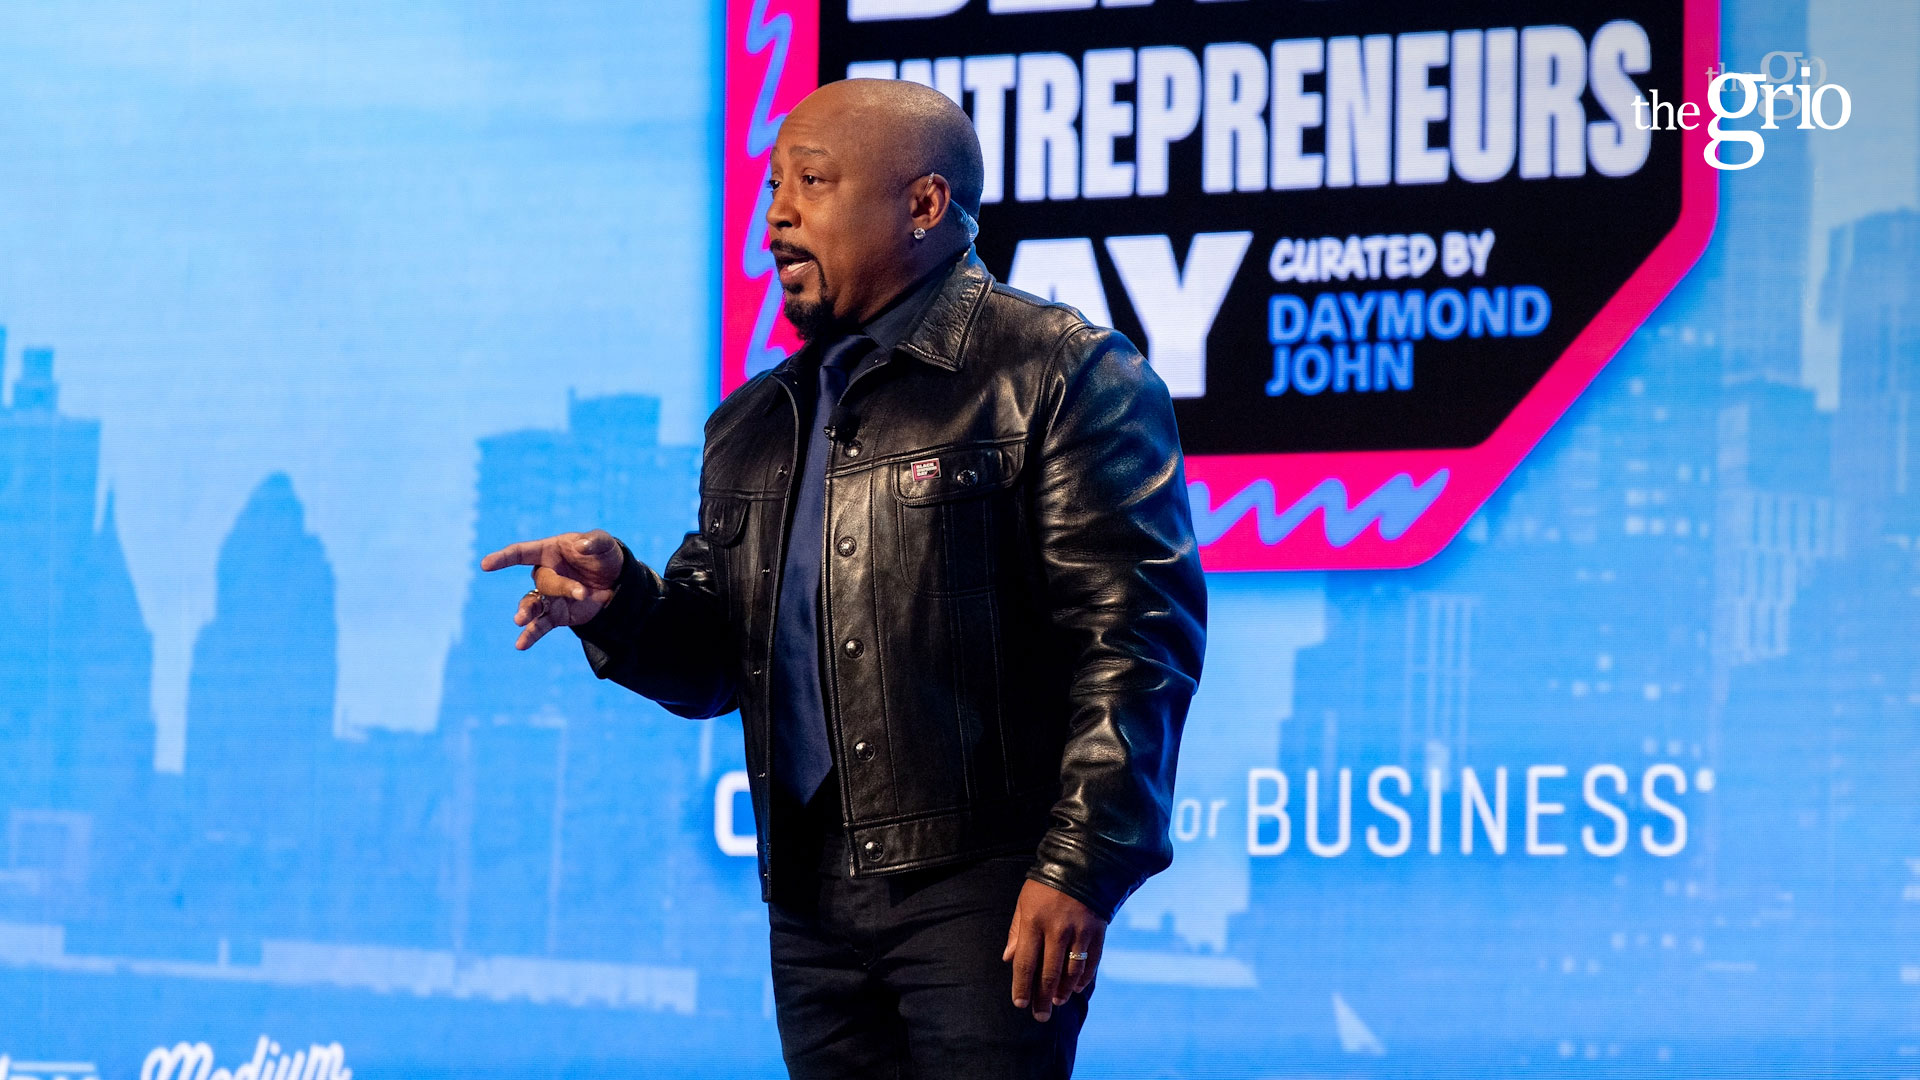 Watch: Daymond John’s Black Entrepreneurs Day